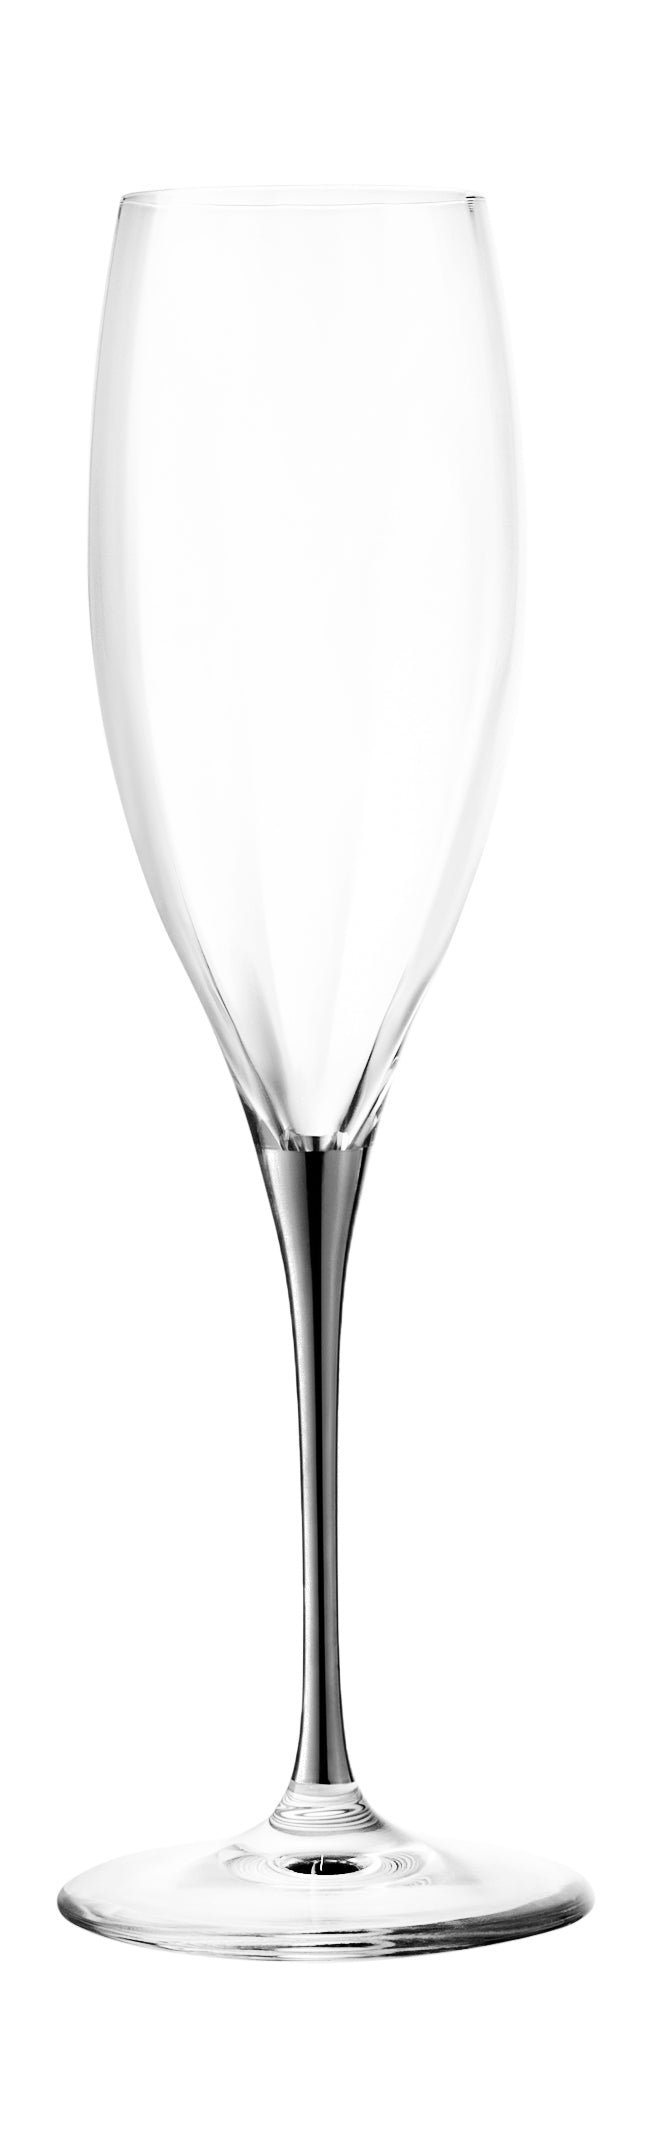 Spectrum Champagne Flute with Platinum Stem, 11 oz. Set of 6